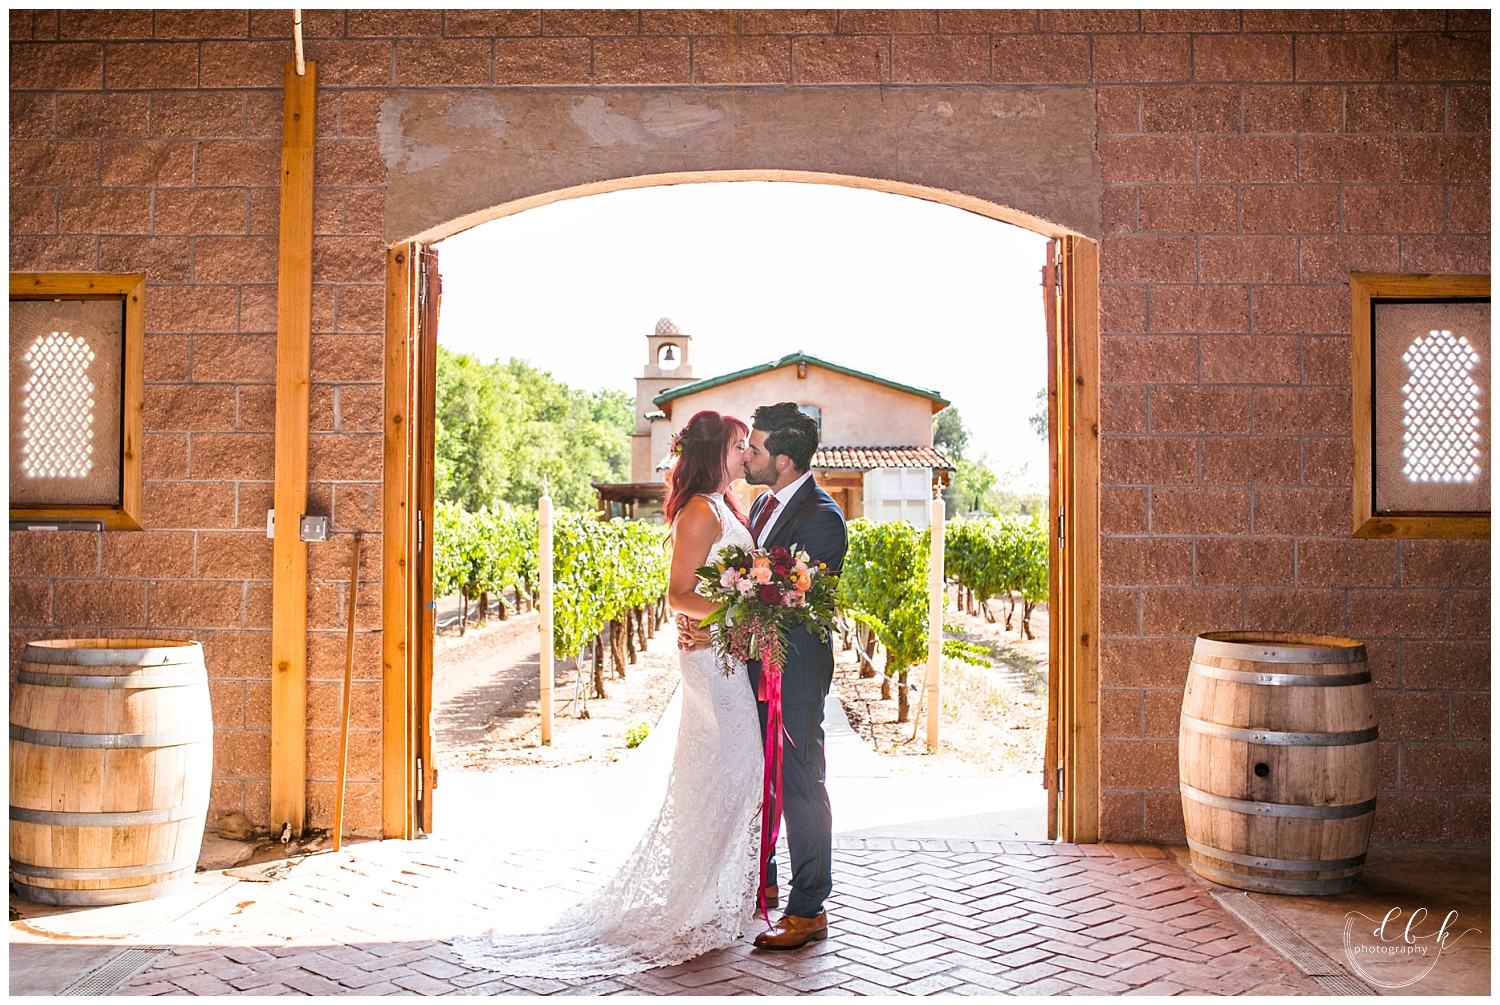 Casa Rondena Winery wedding portraits at the wine cellar